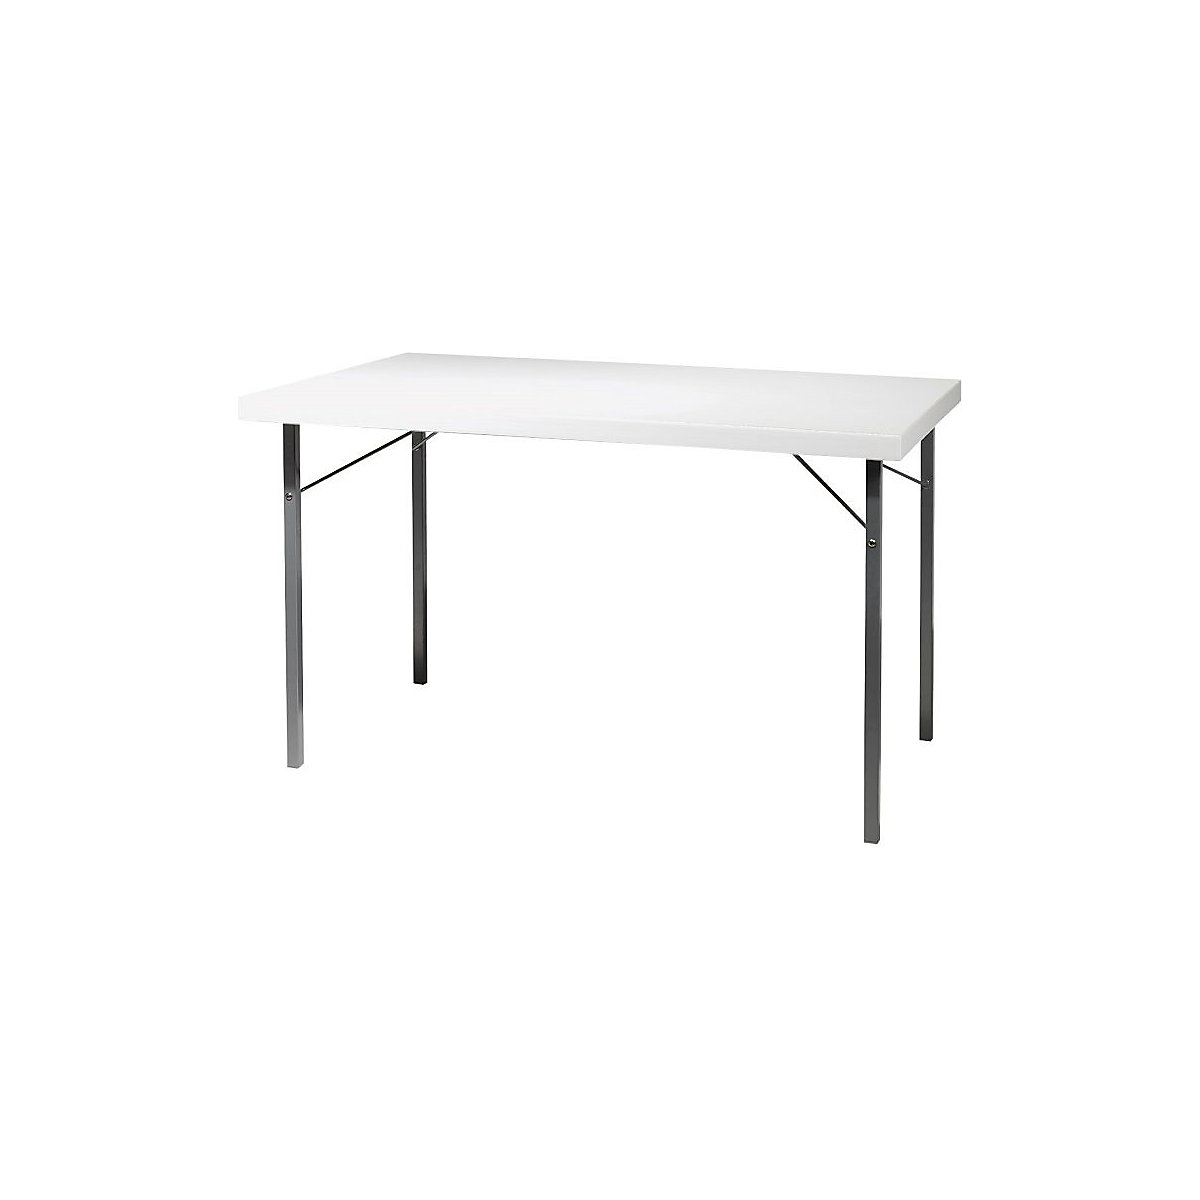 Folding table, metal frame, aluminium silver, WxD 1200 x 800 mm, white tabletop-1